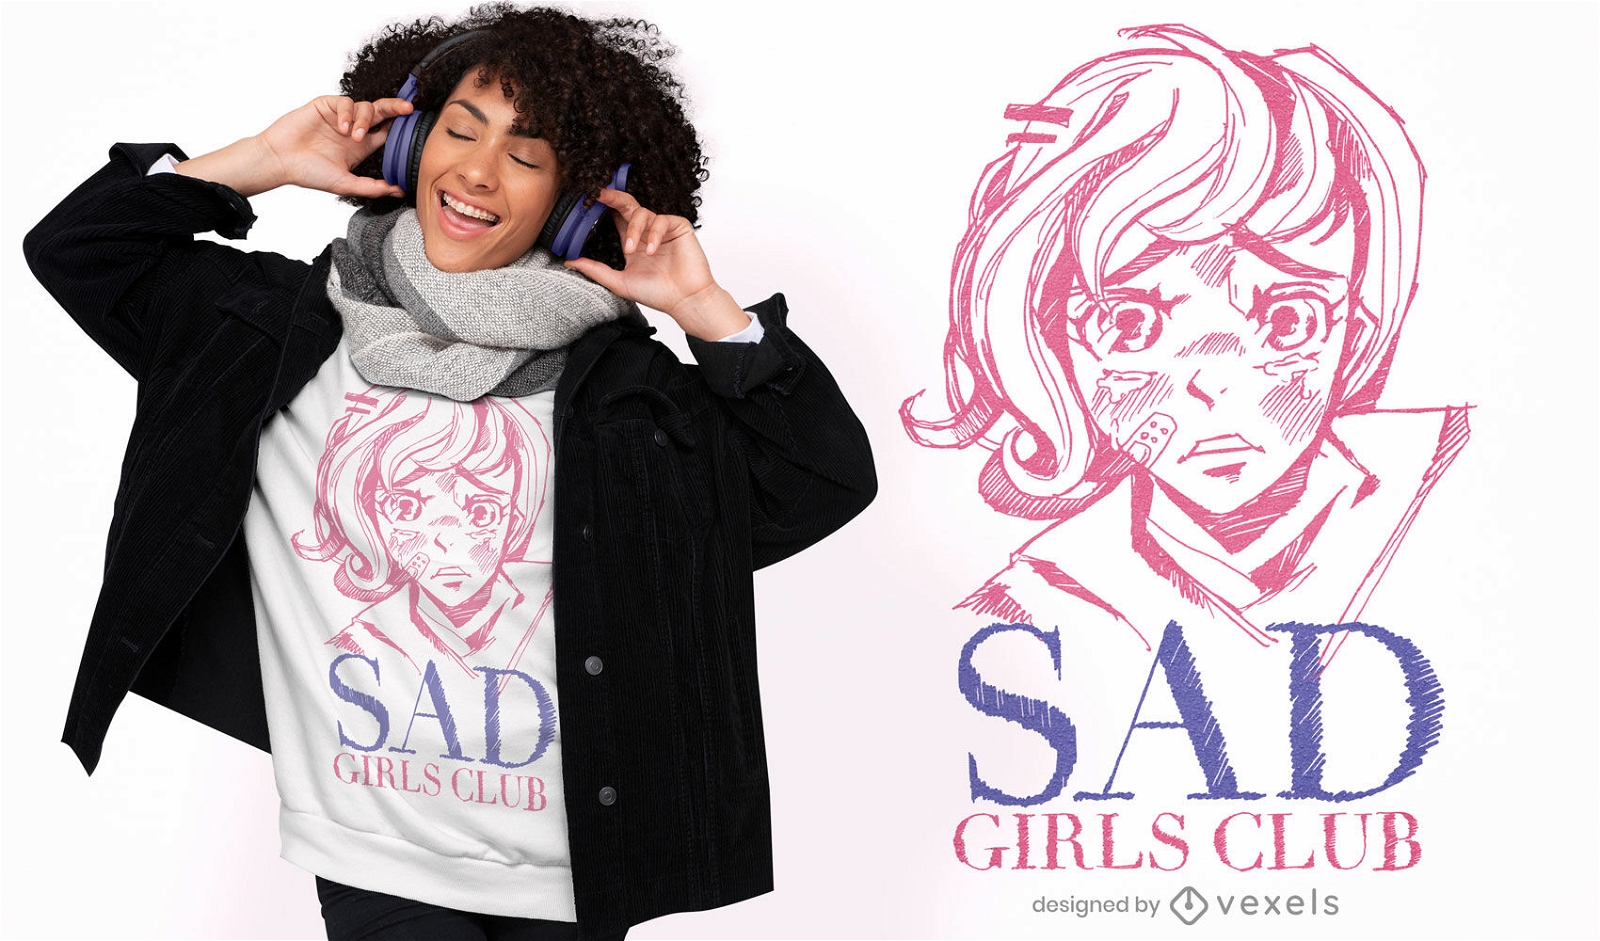 Sad girls club anime t-shirt design